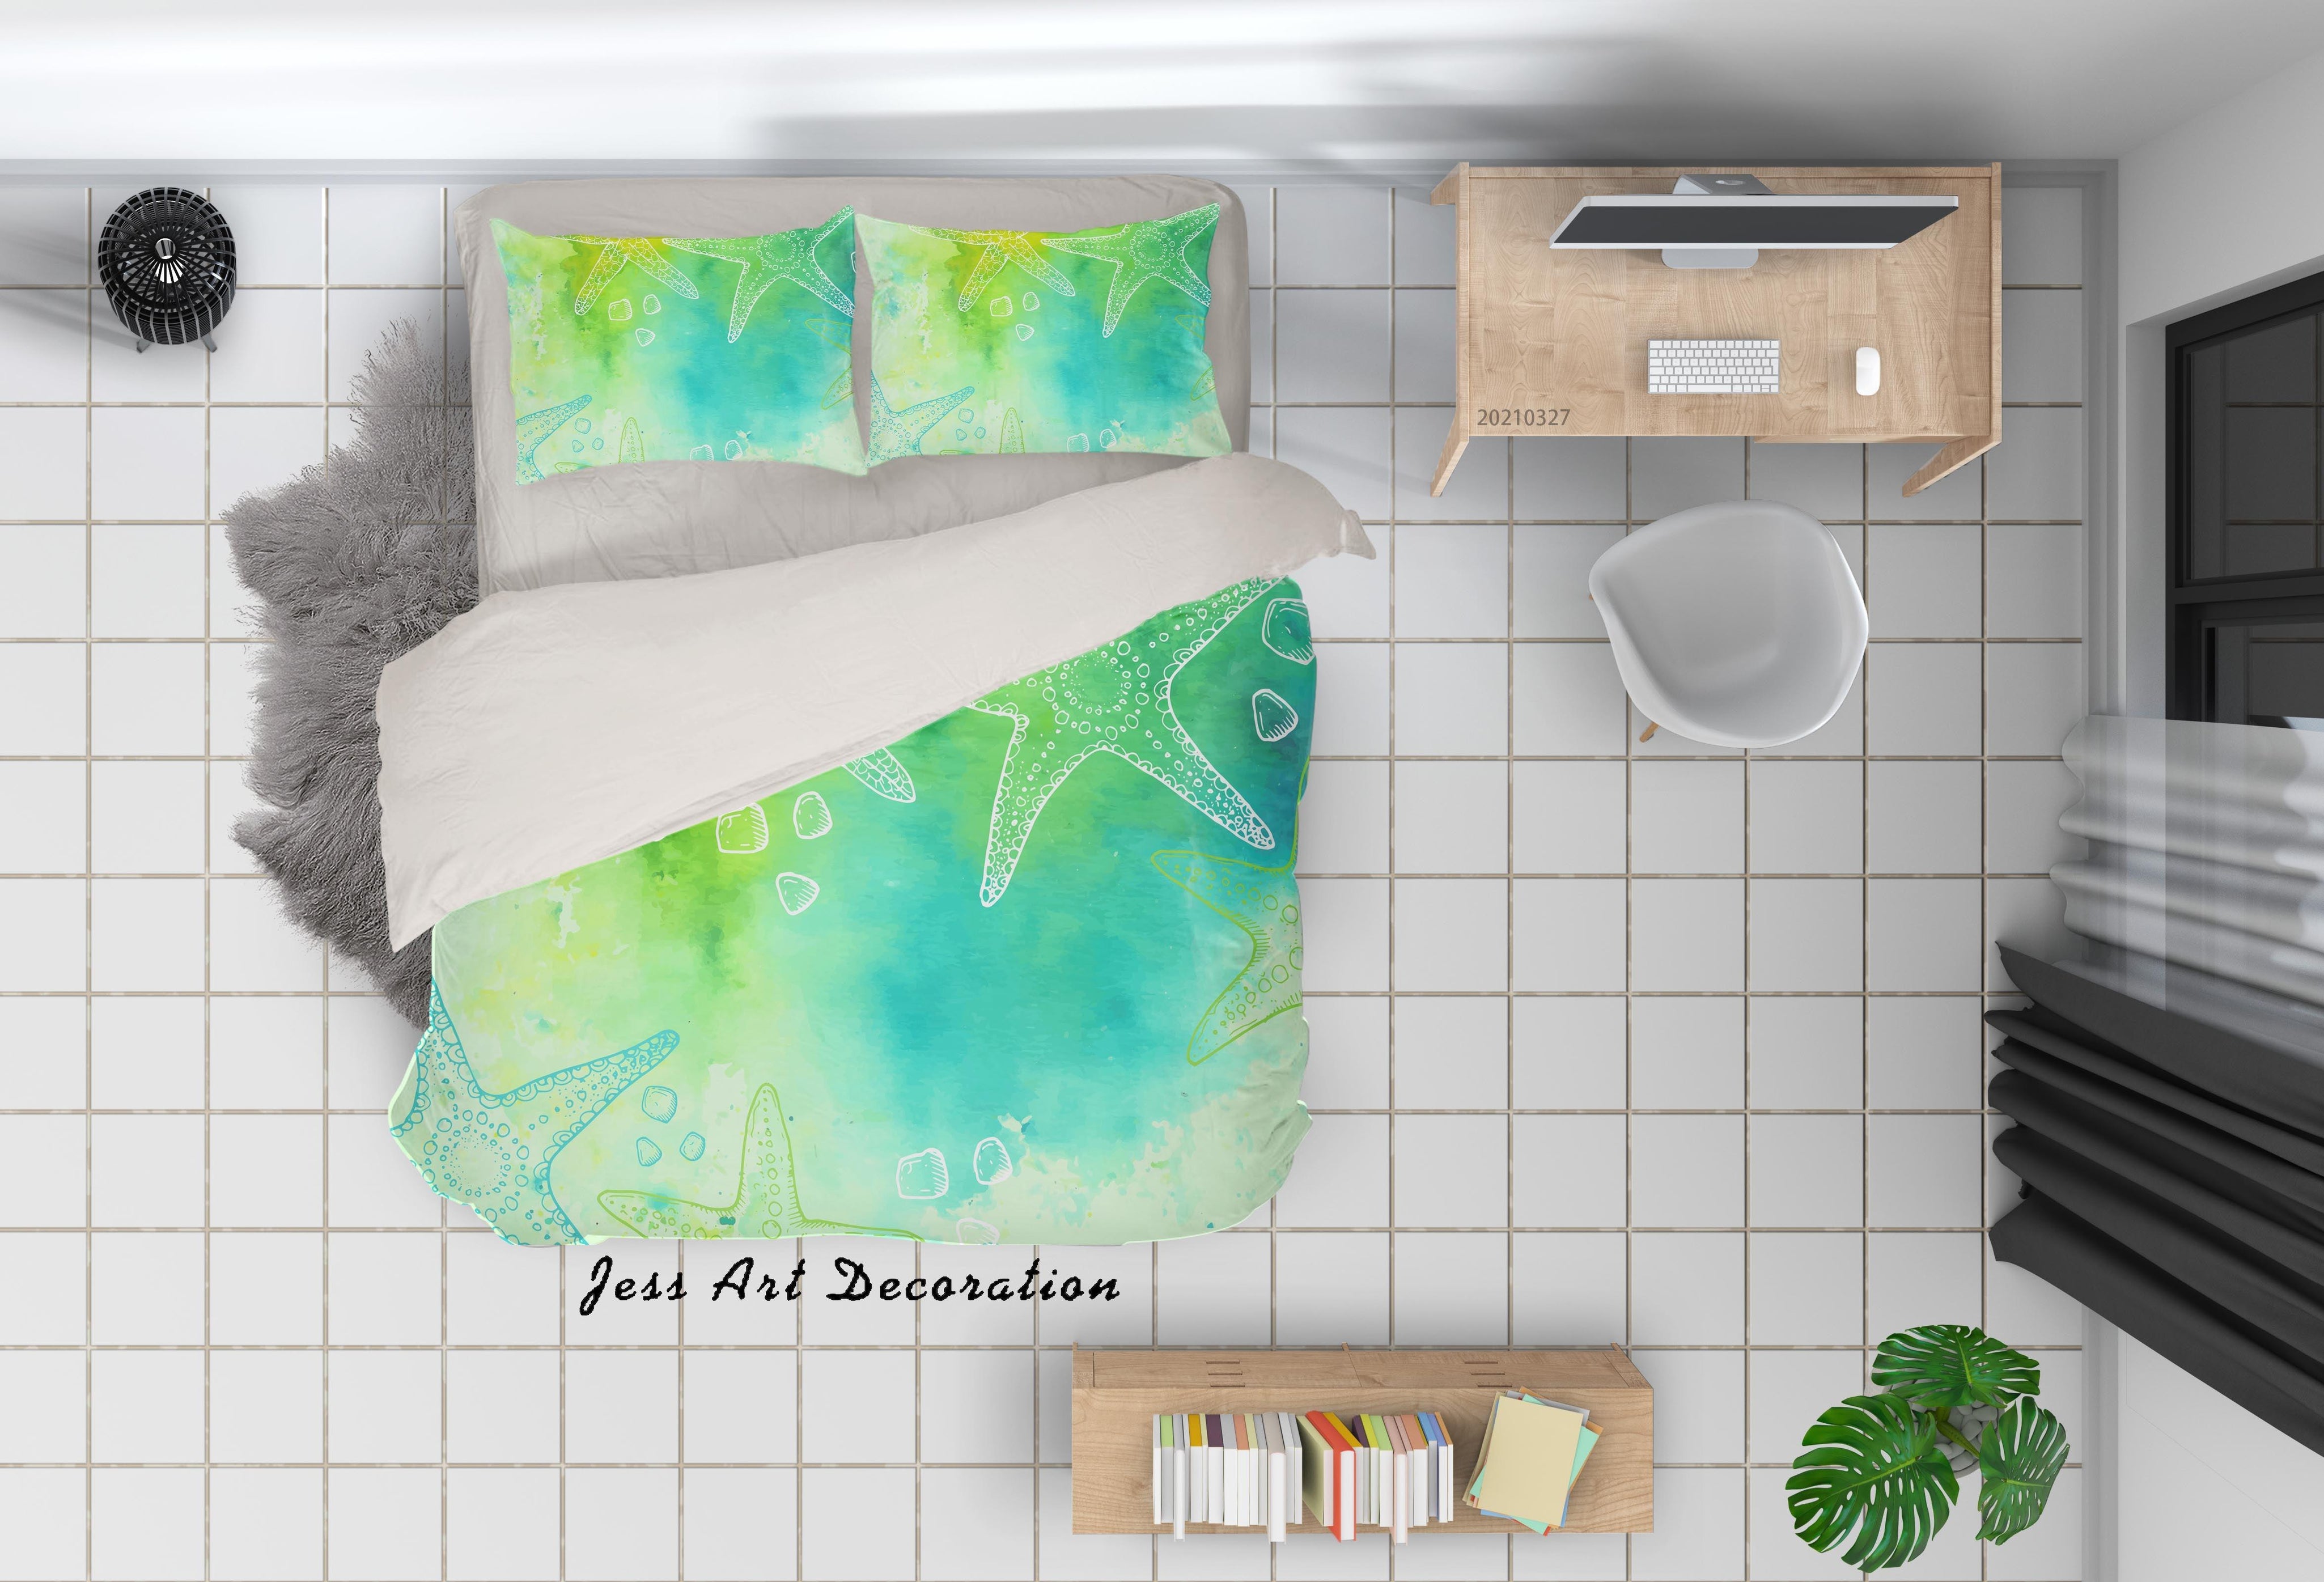 3D Watercolor Green Starfish Quilt Cover Set Bedding Set Duvet Cover Pillowcases 314- Jess Art Decoration